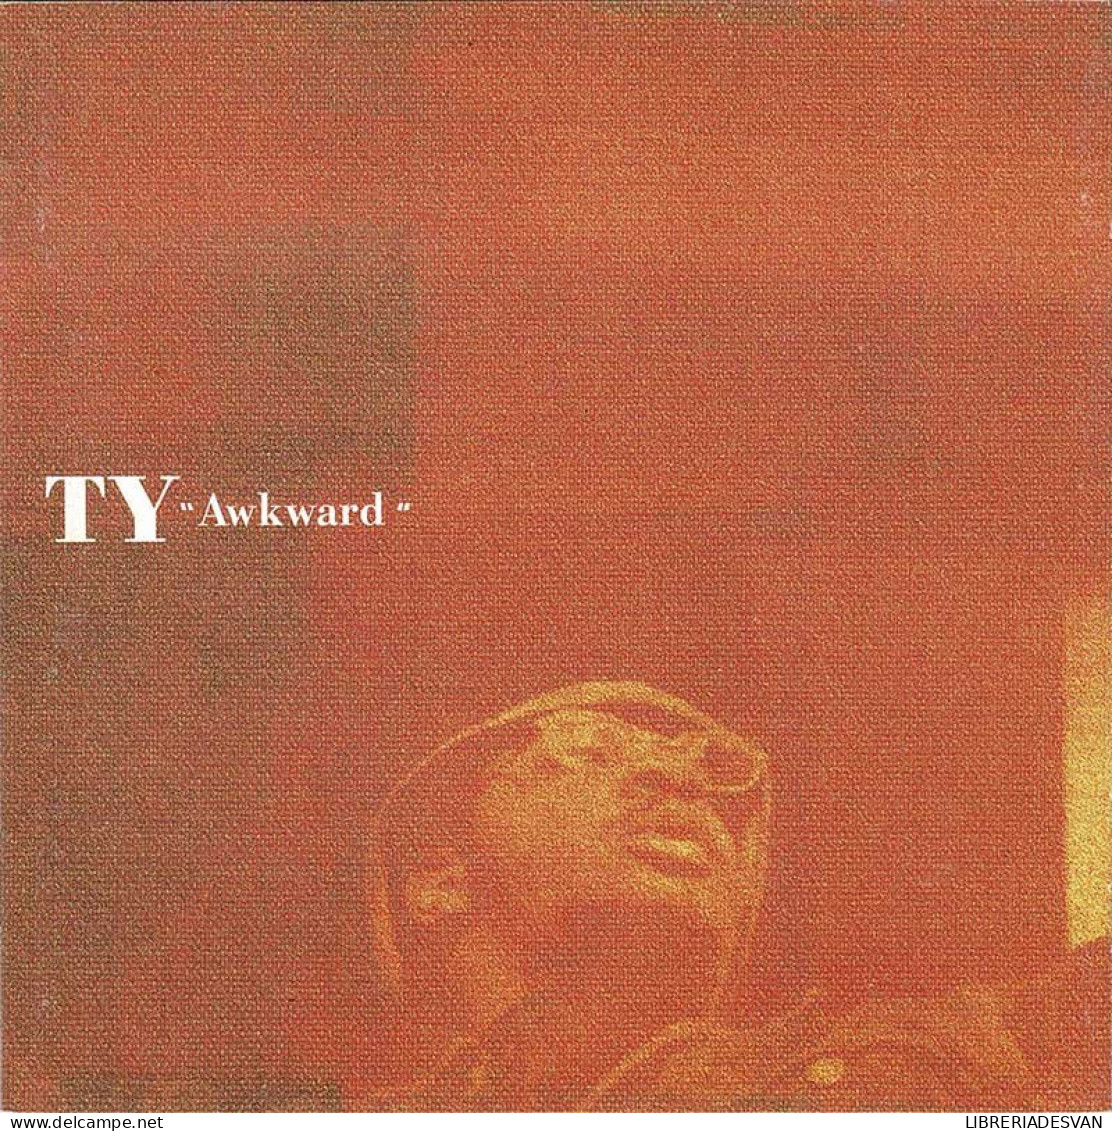 Ty - Awkward. CD - Rap & Hip Hop